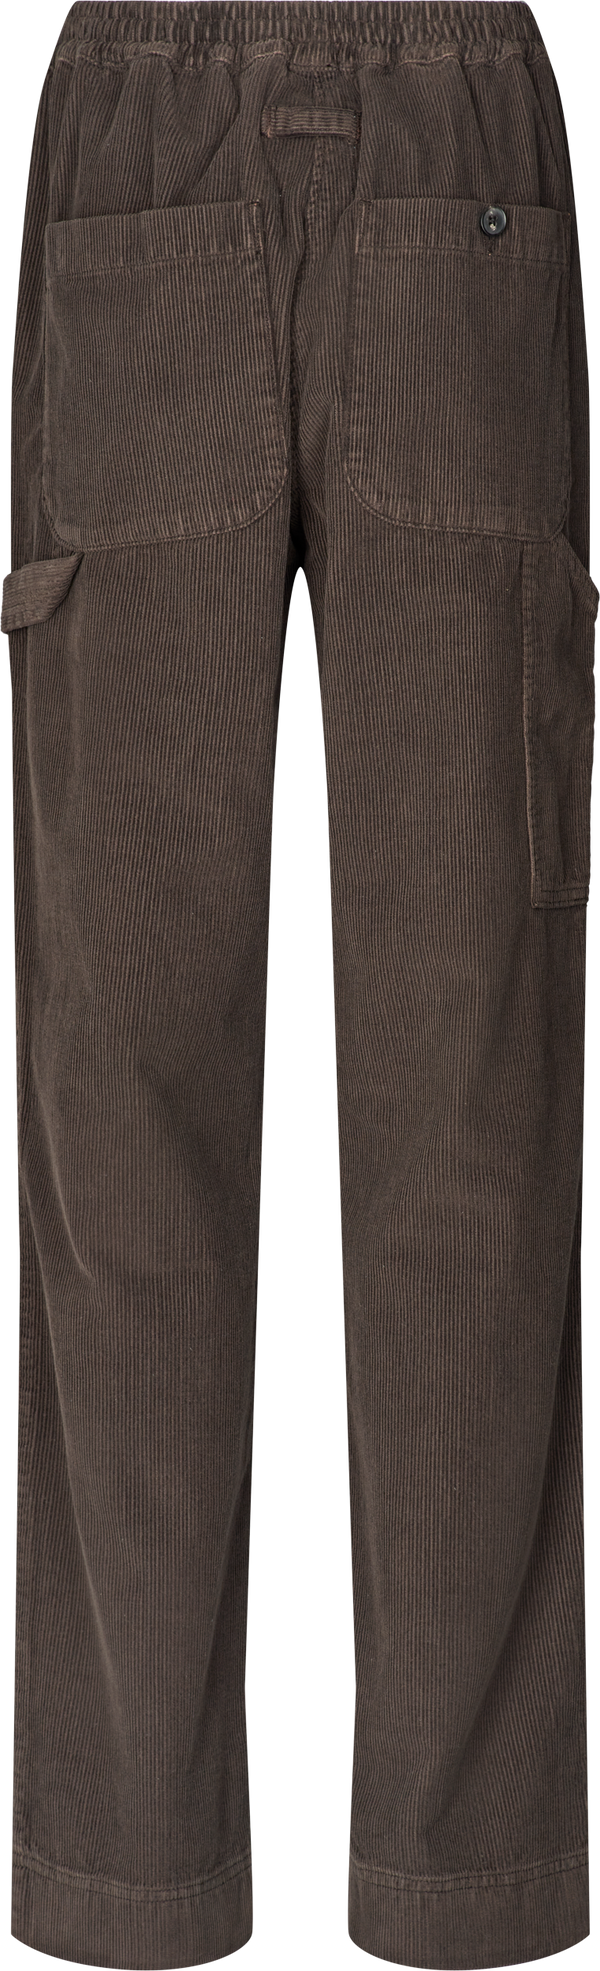 GAI+LISVA Alice02 Corduroy Pant Pants & Shorts 681 Mulch